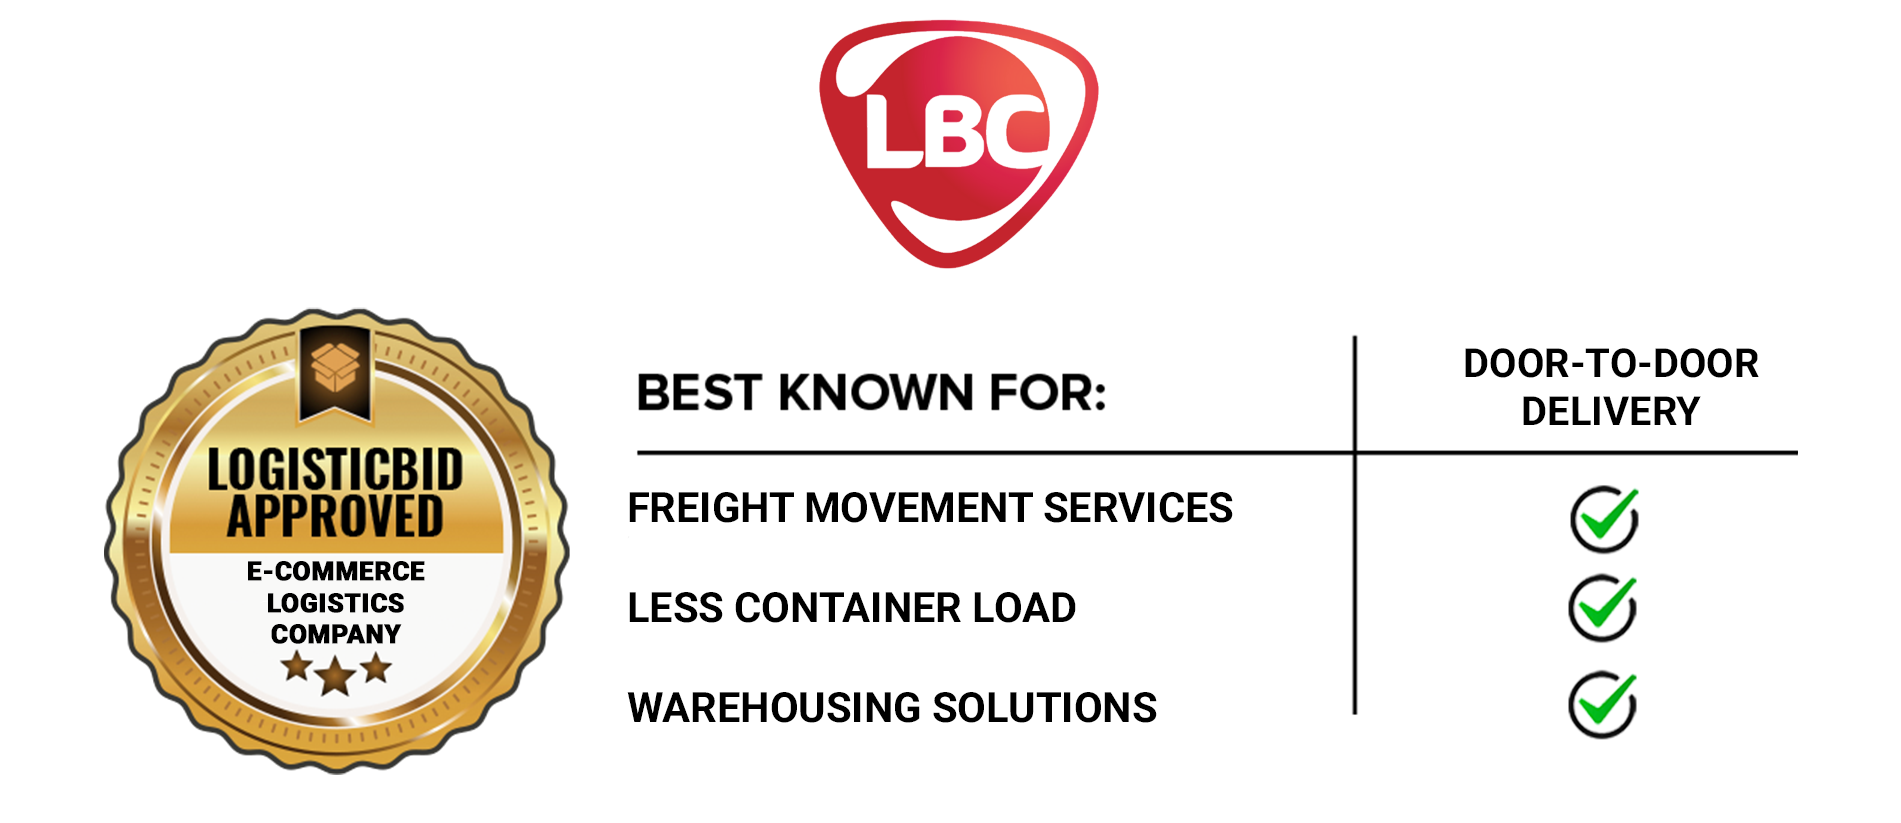 Trucking Services of Leading E-commerce Logistics Company - LBC